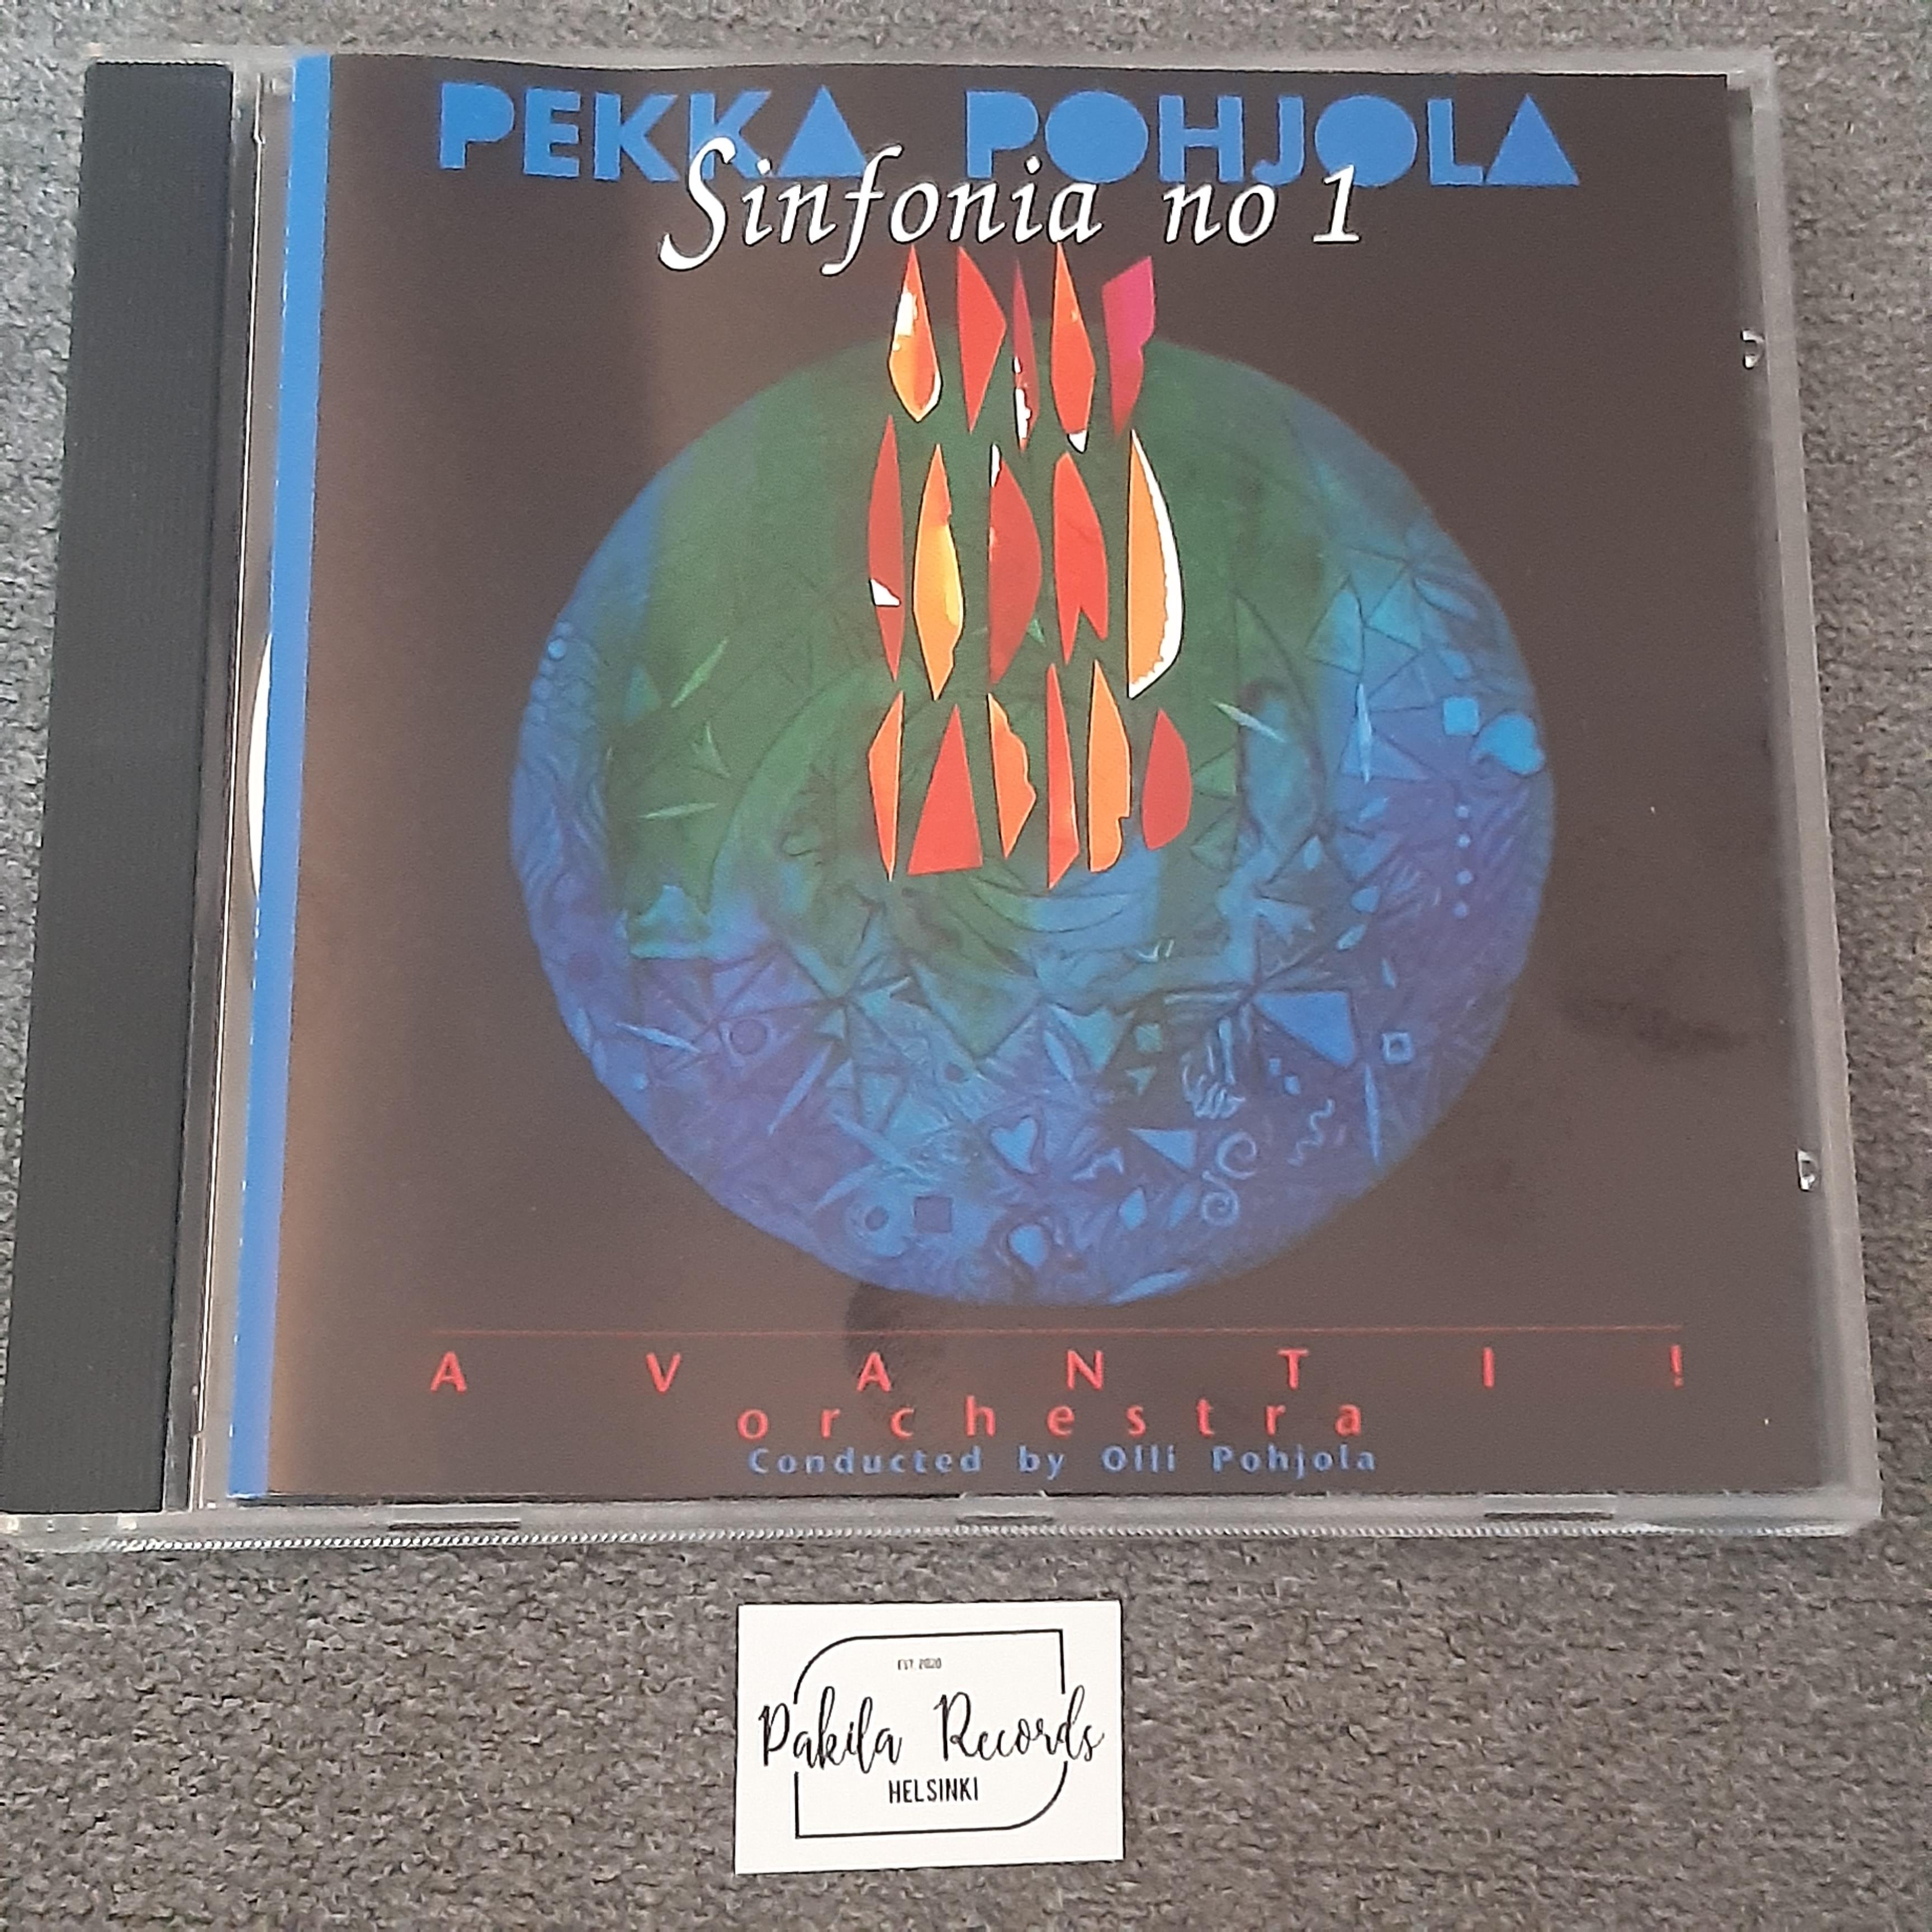 Pekka Pohjola, Avanti! Orchestra - Sinfonia No 1 - CD (käytetty)